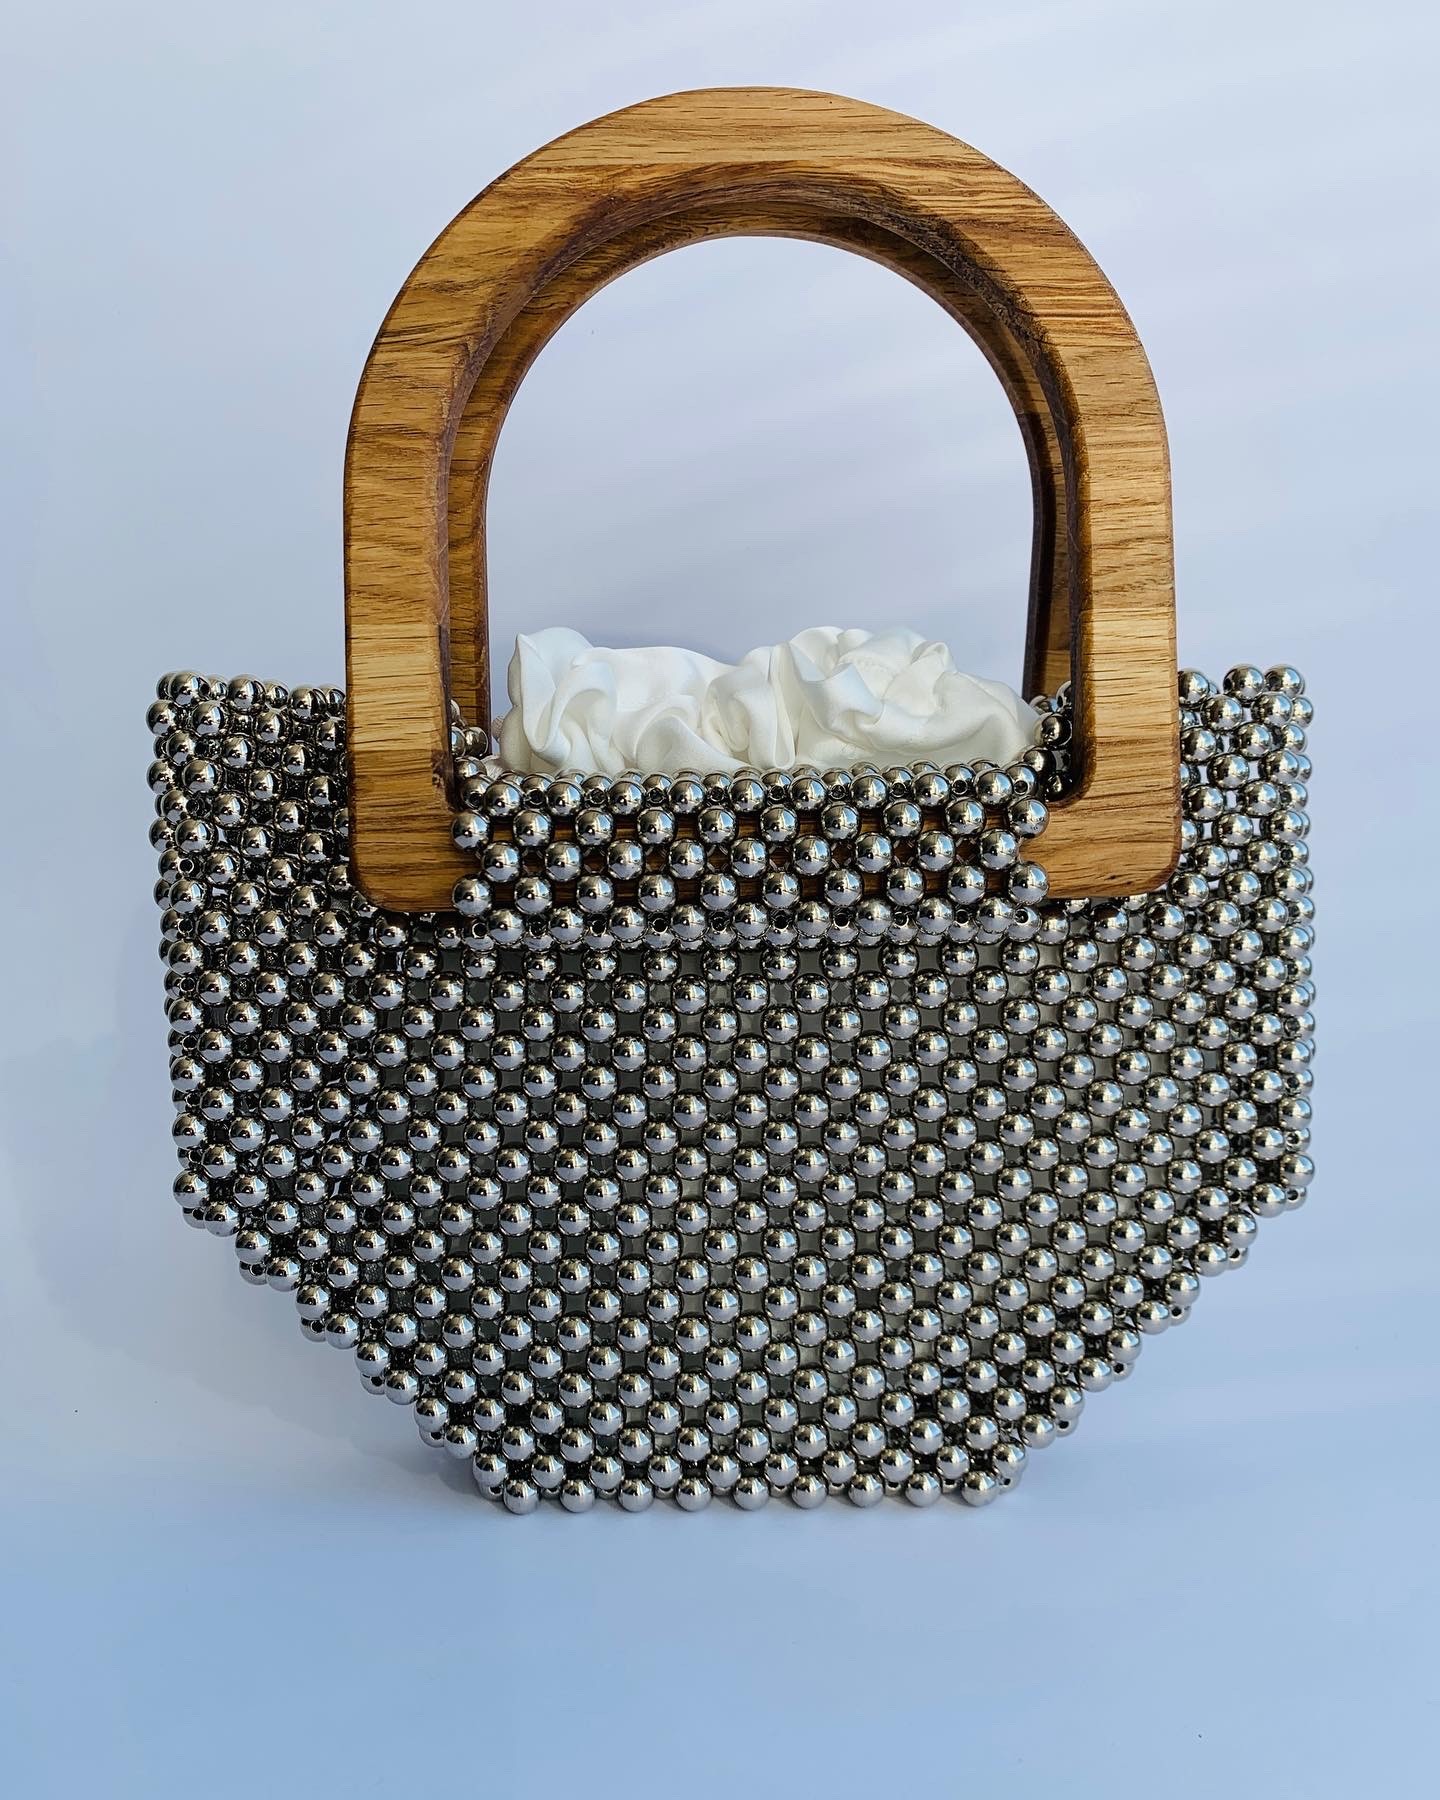 BAG made of beads, handmade, wooden handles, minimalism, gift for a girl, aesthetic bag metal beads